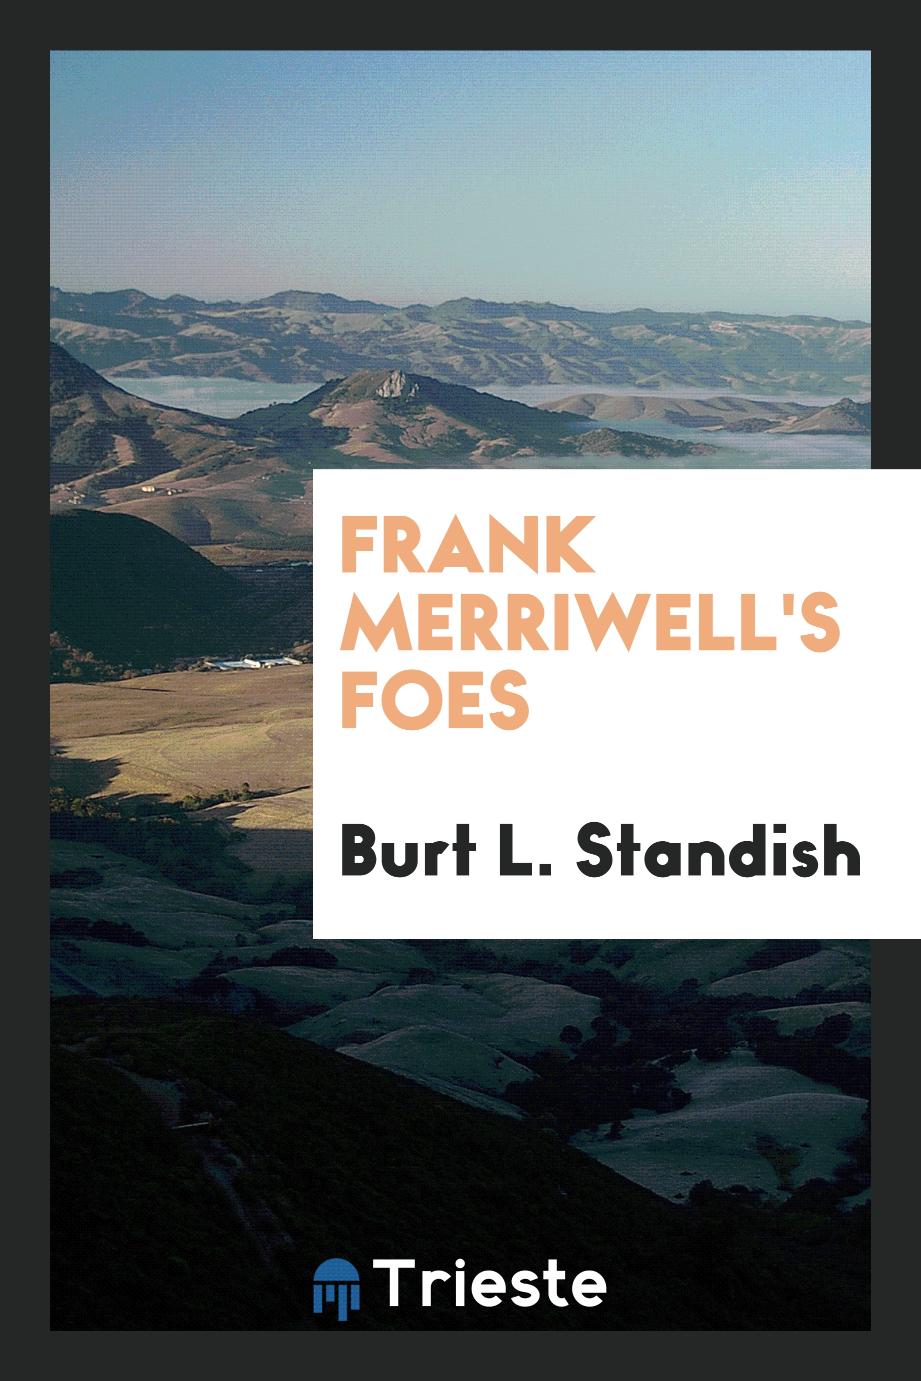 Frank Merriwell's foes